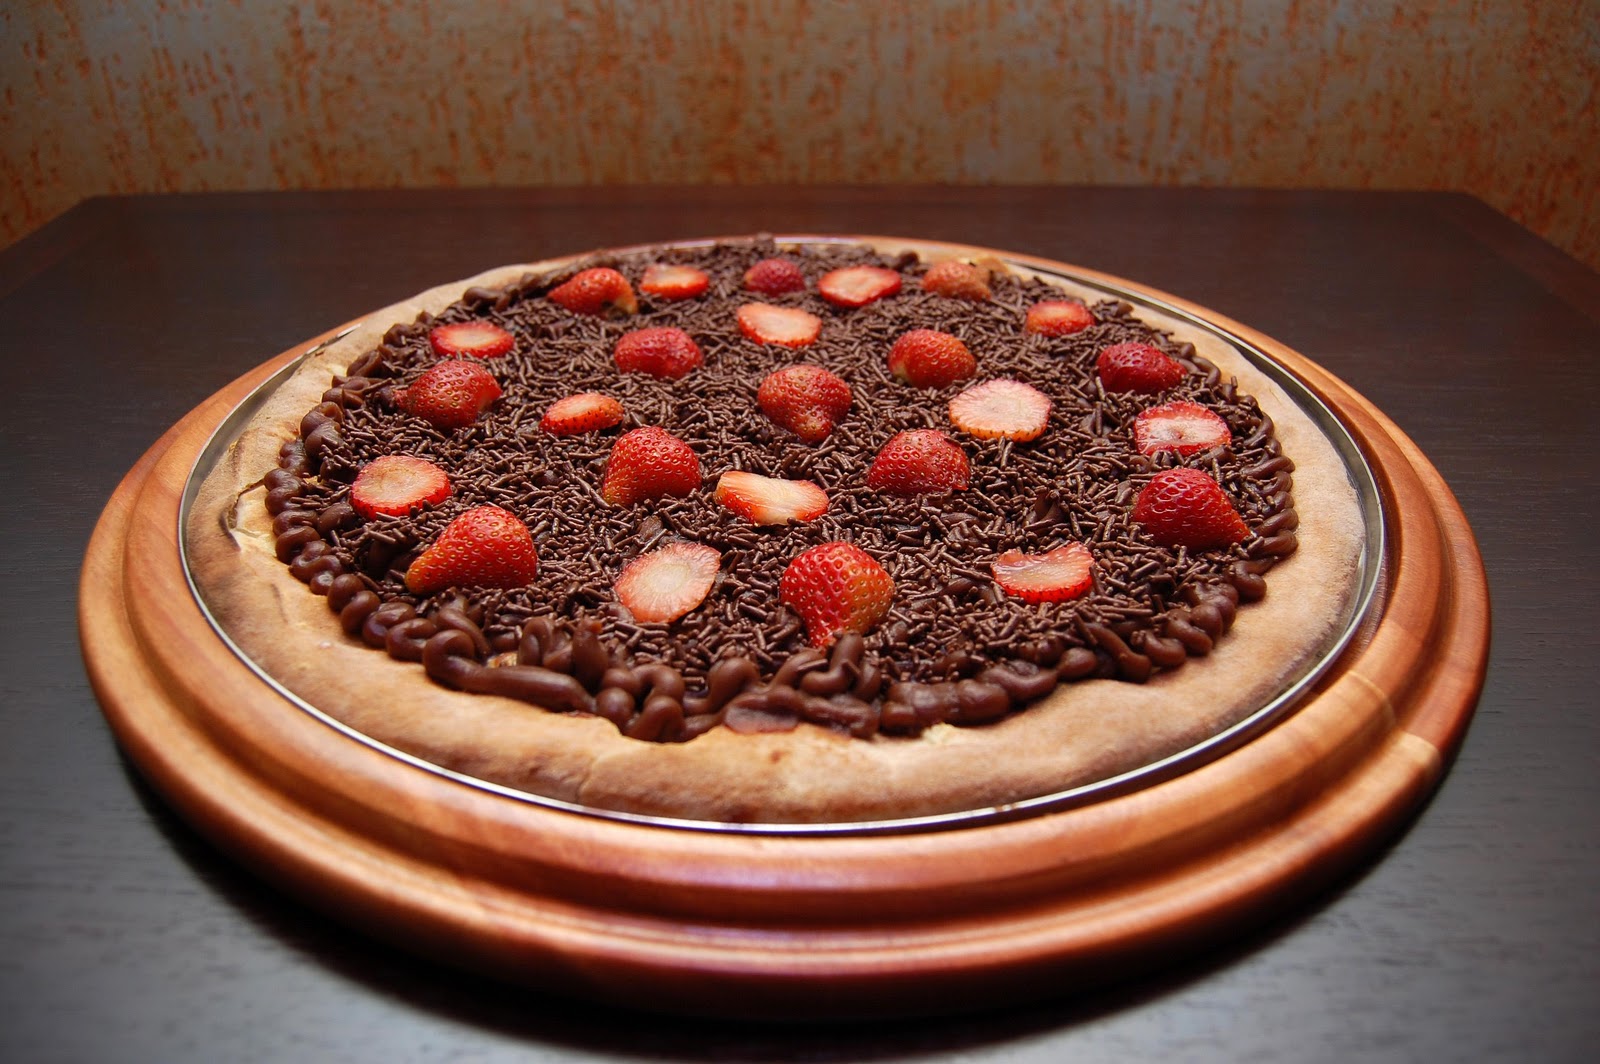 шоколадная пицца игра фото 24